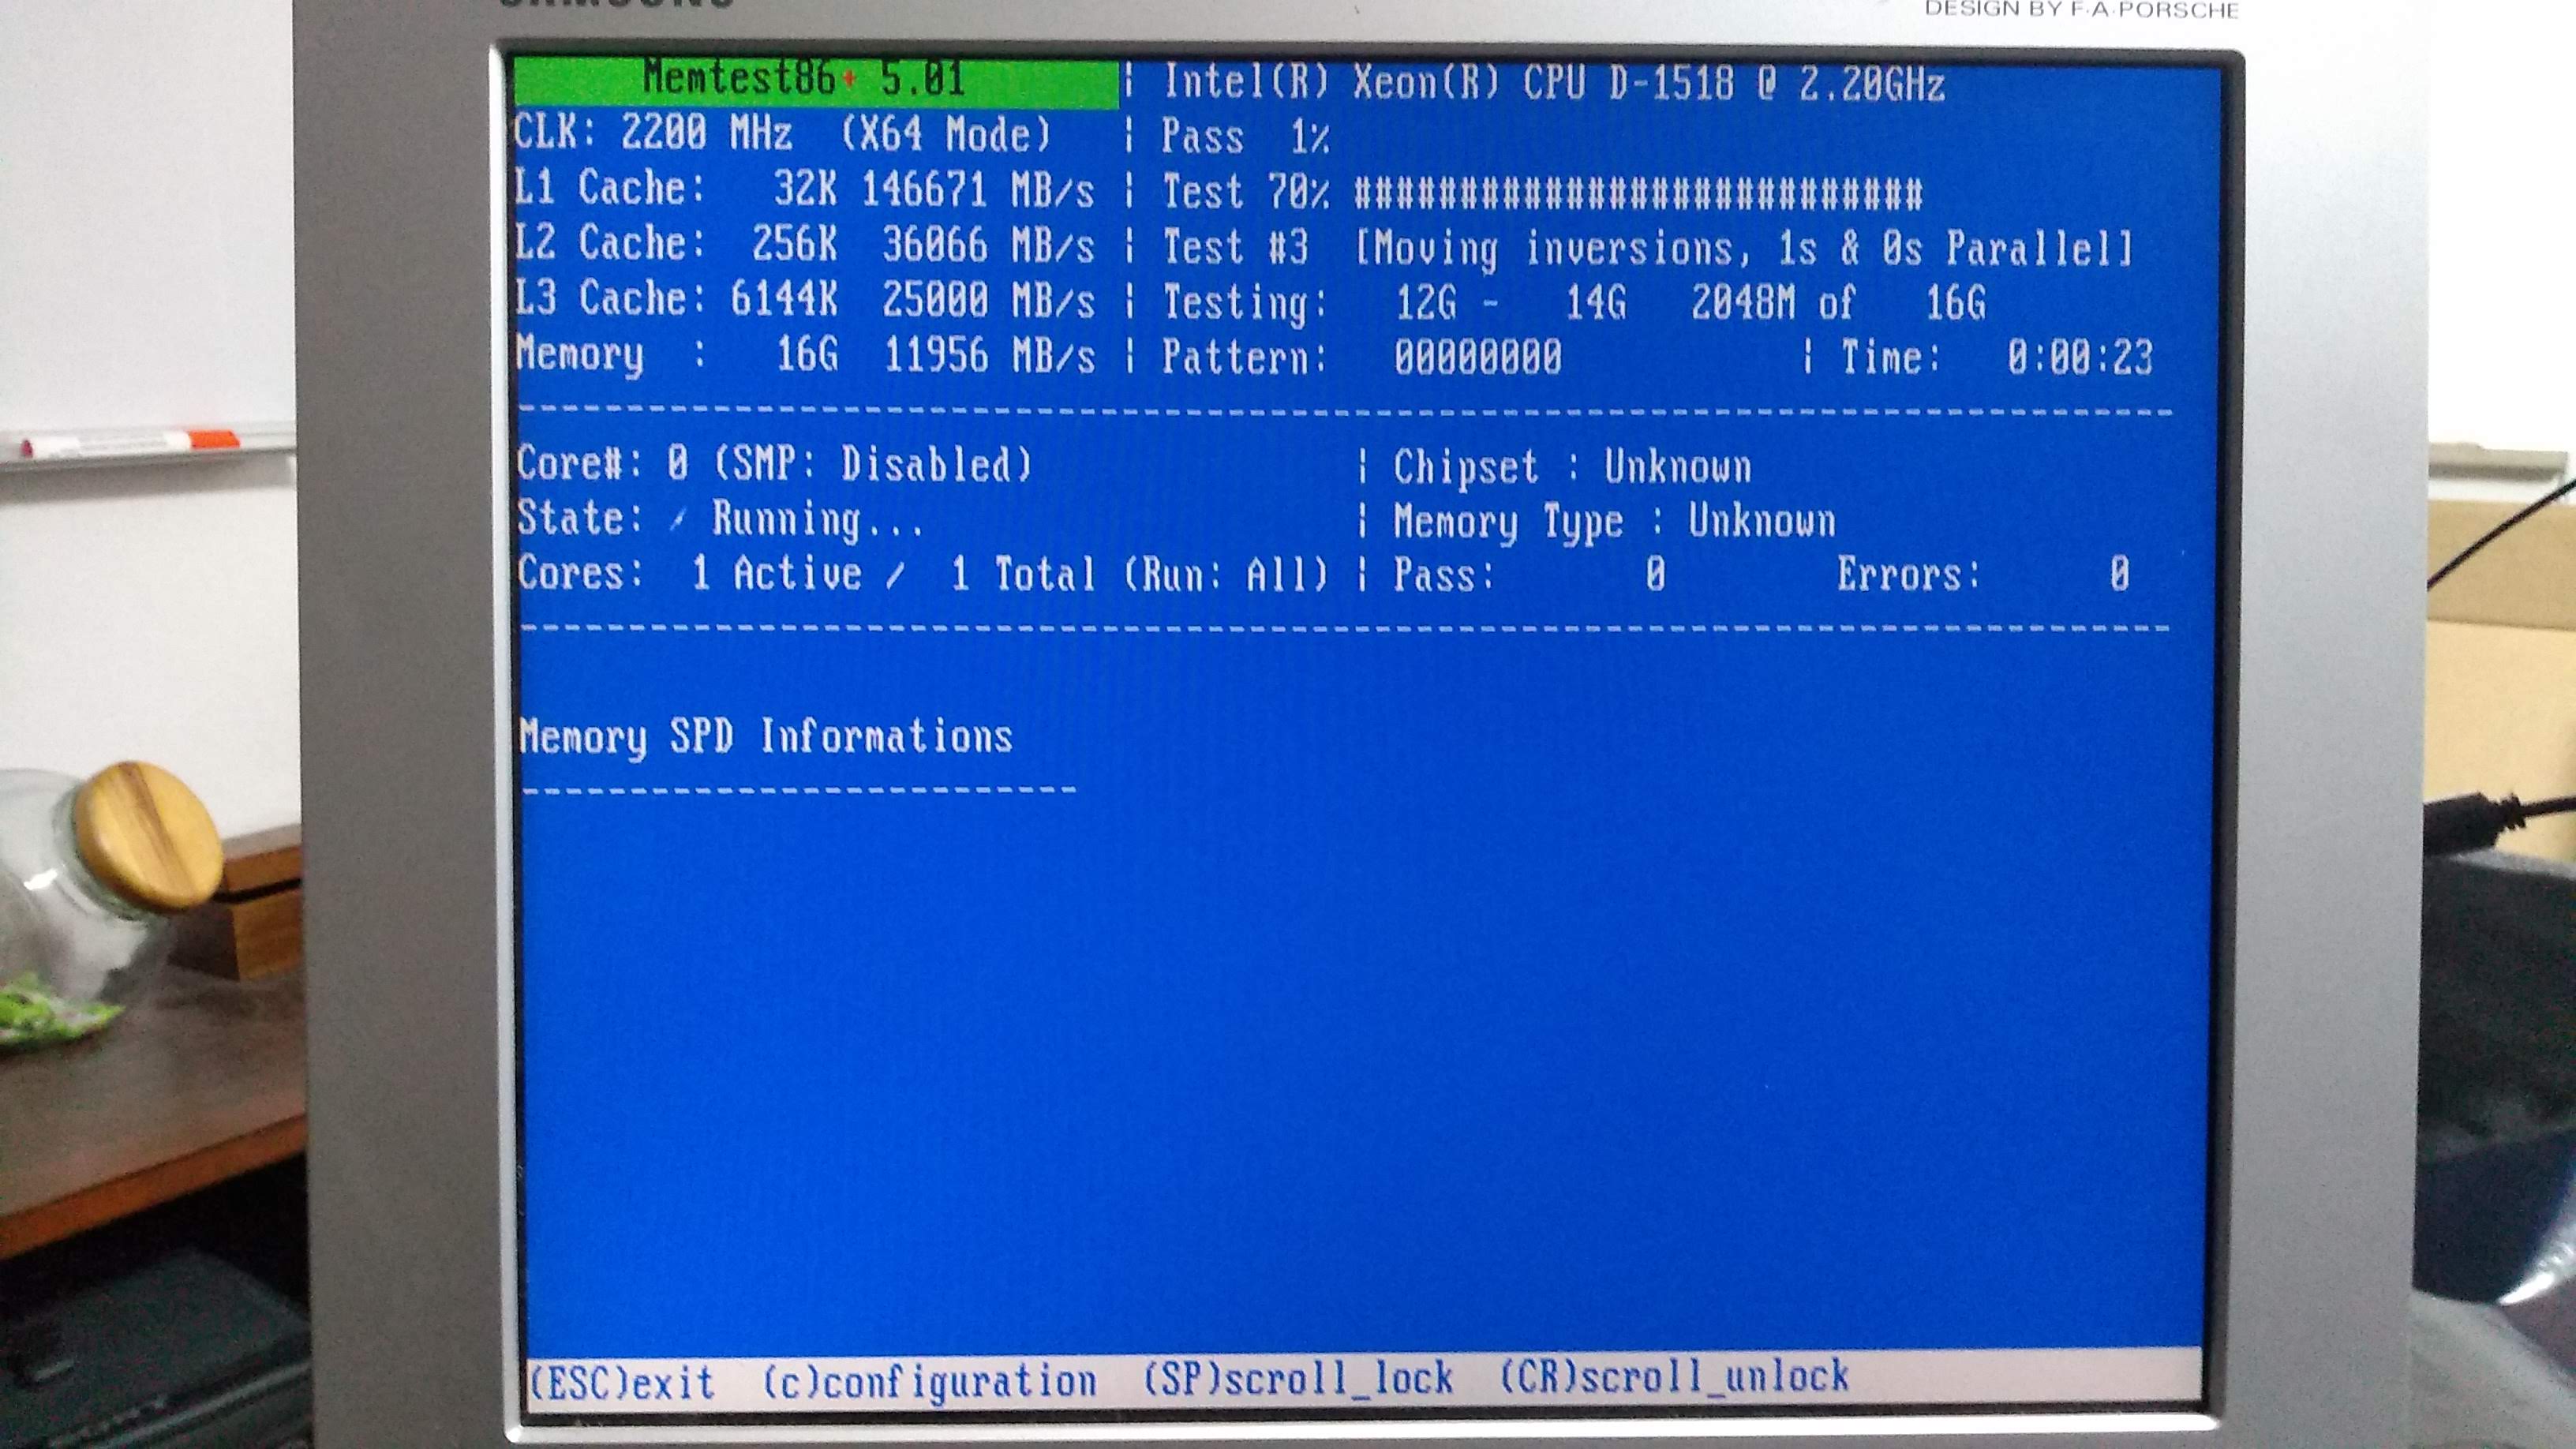 System performing RAM test